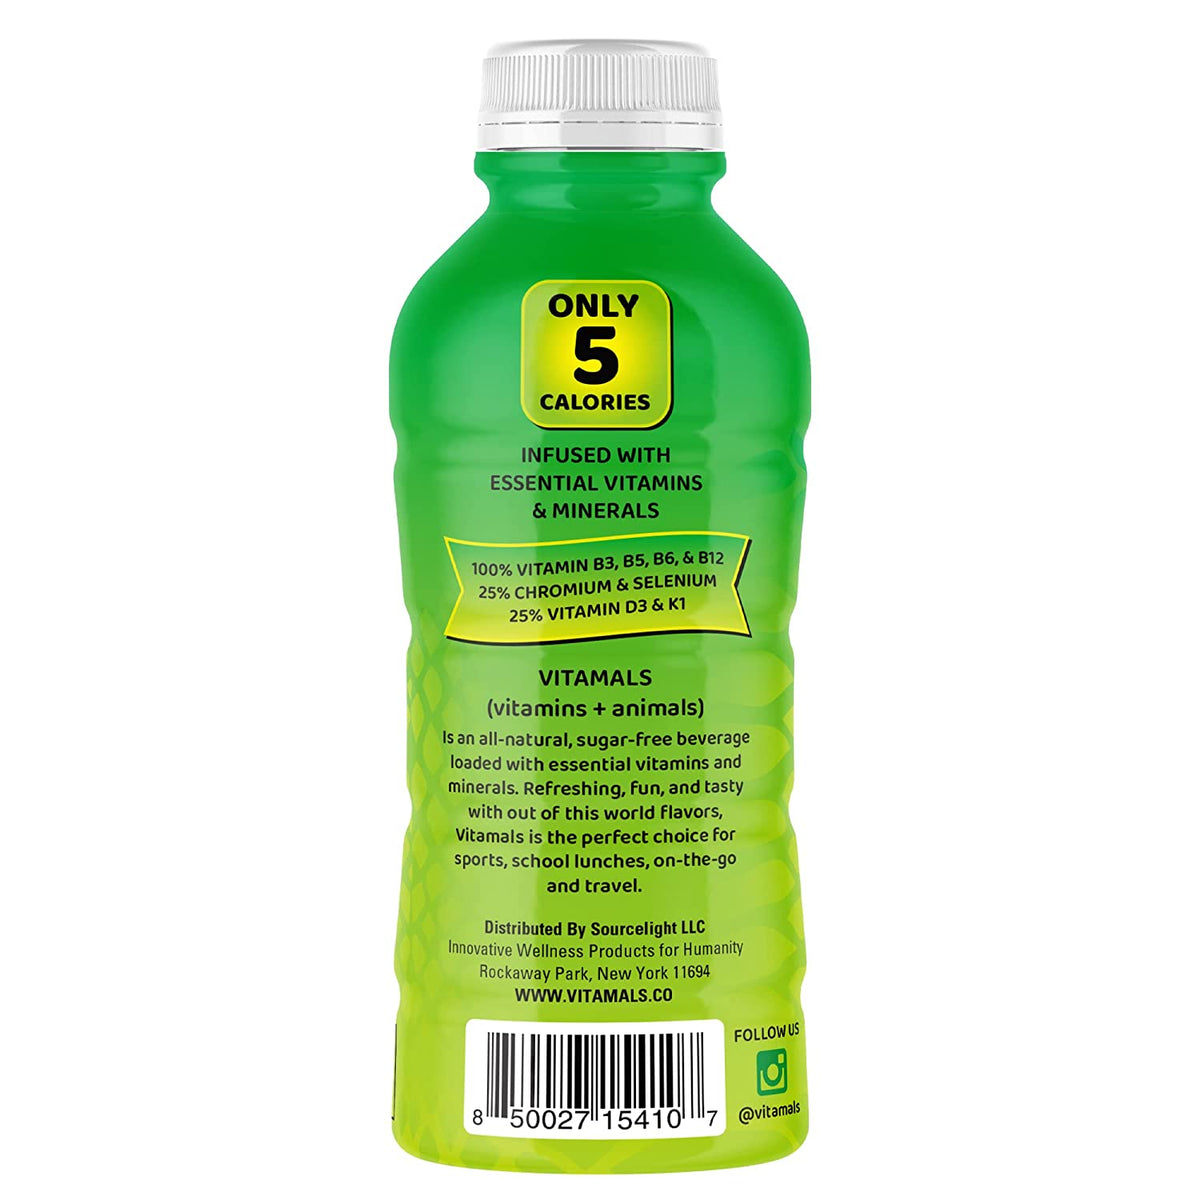 Vitamals Enhanced Flavored Water - Sour Apple Alligator - 12 fl oz (Pack of 6)